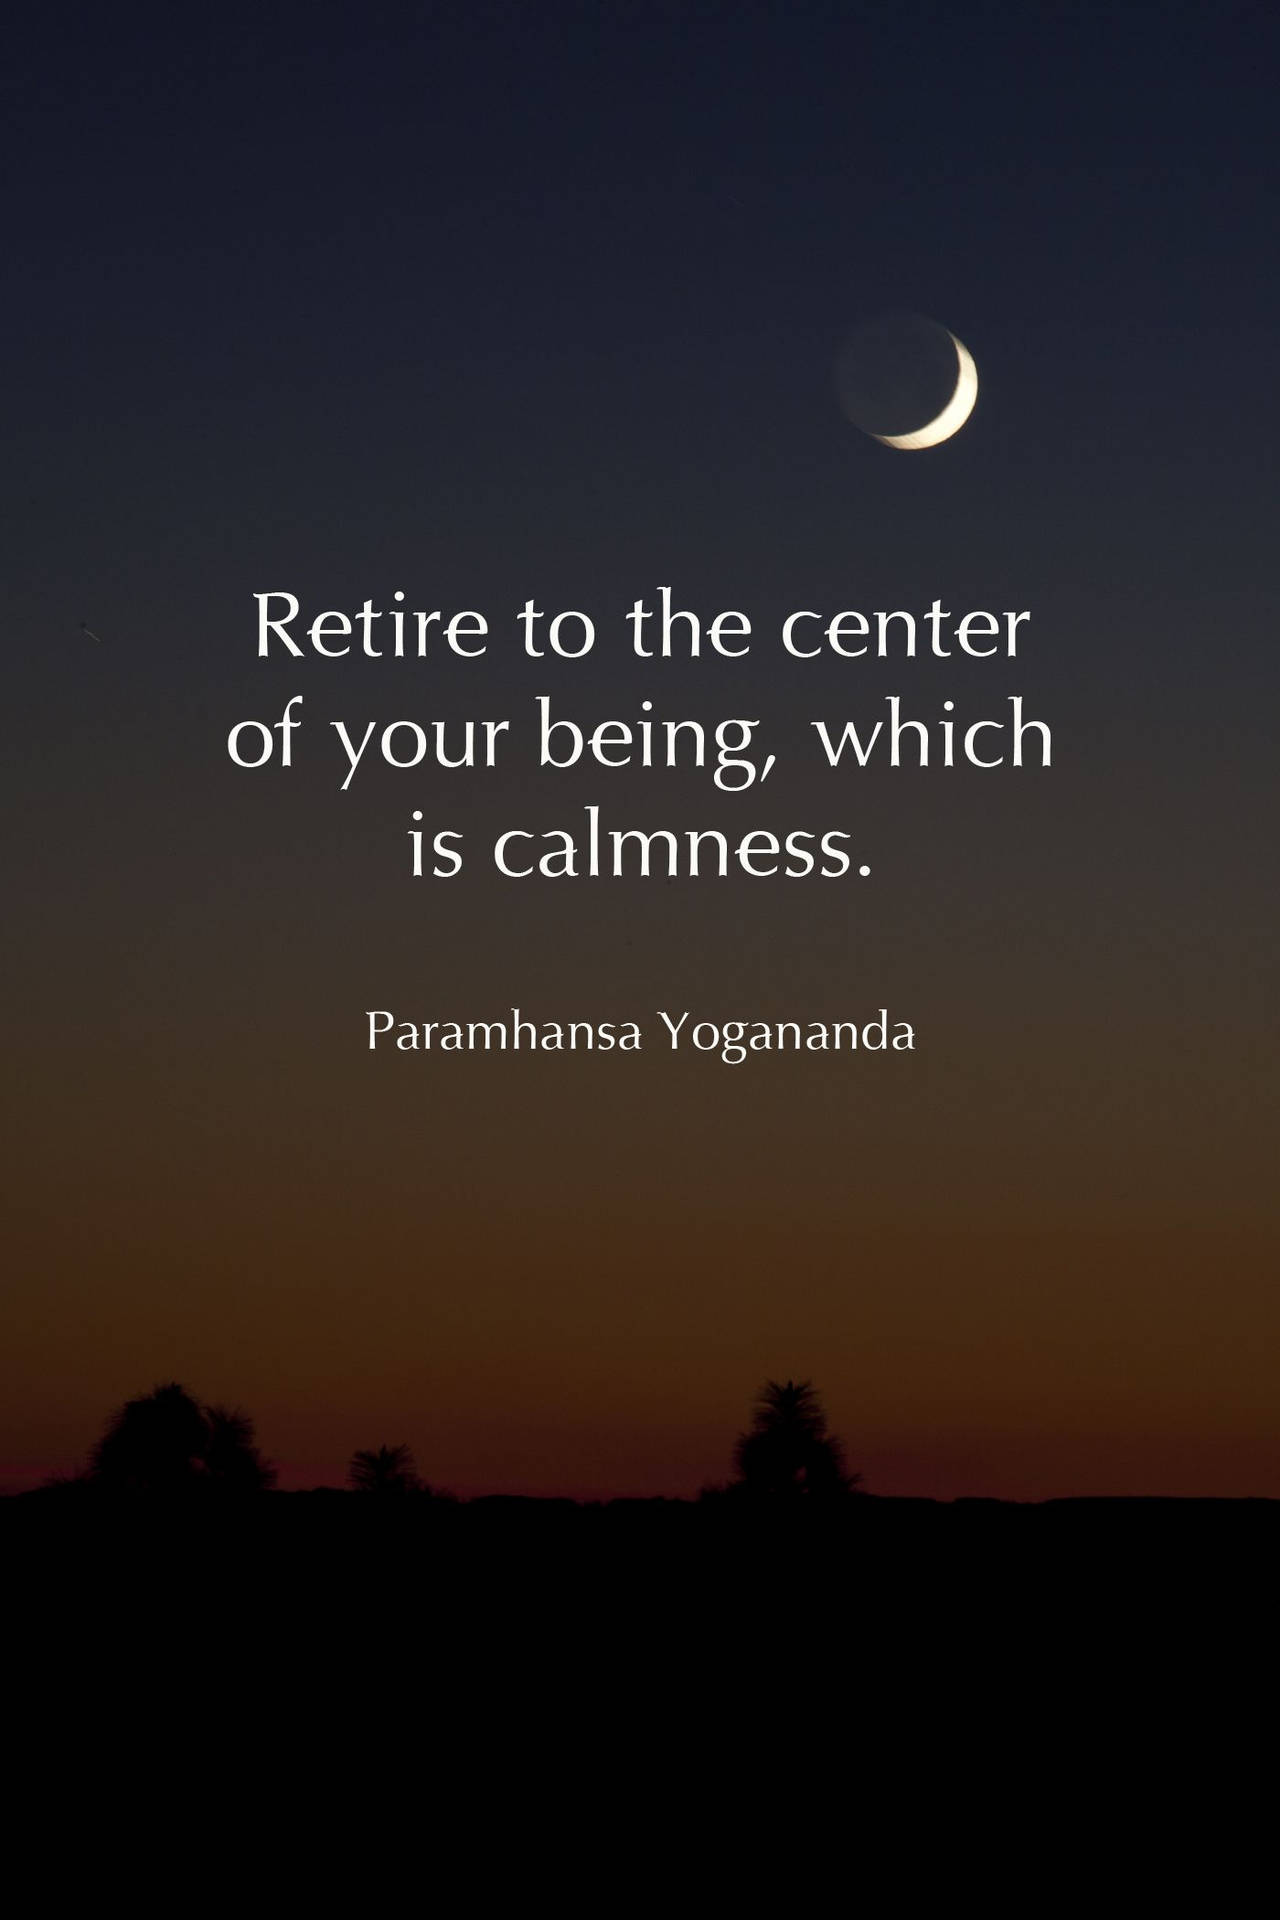 Månens citat Paramhansa Yogananda Living Room Wallpaper: Tag lykken gennem at følge dine drømme. Wallpaper